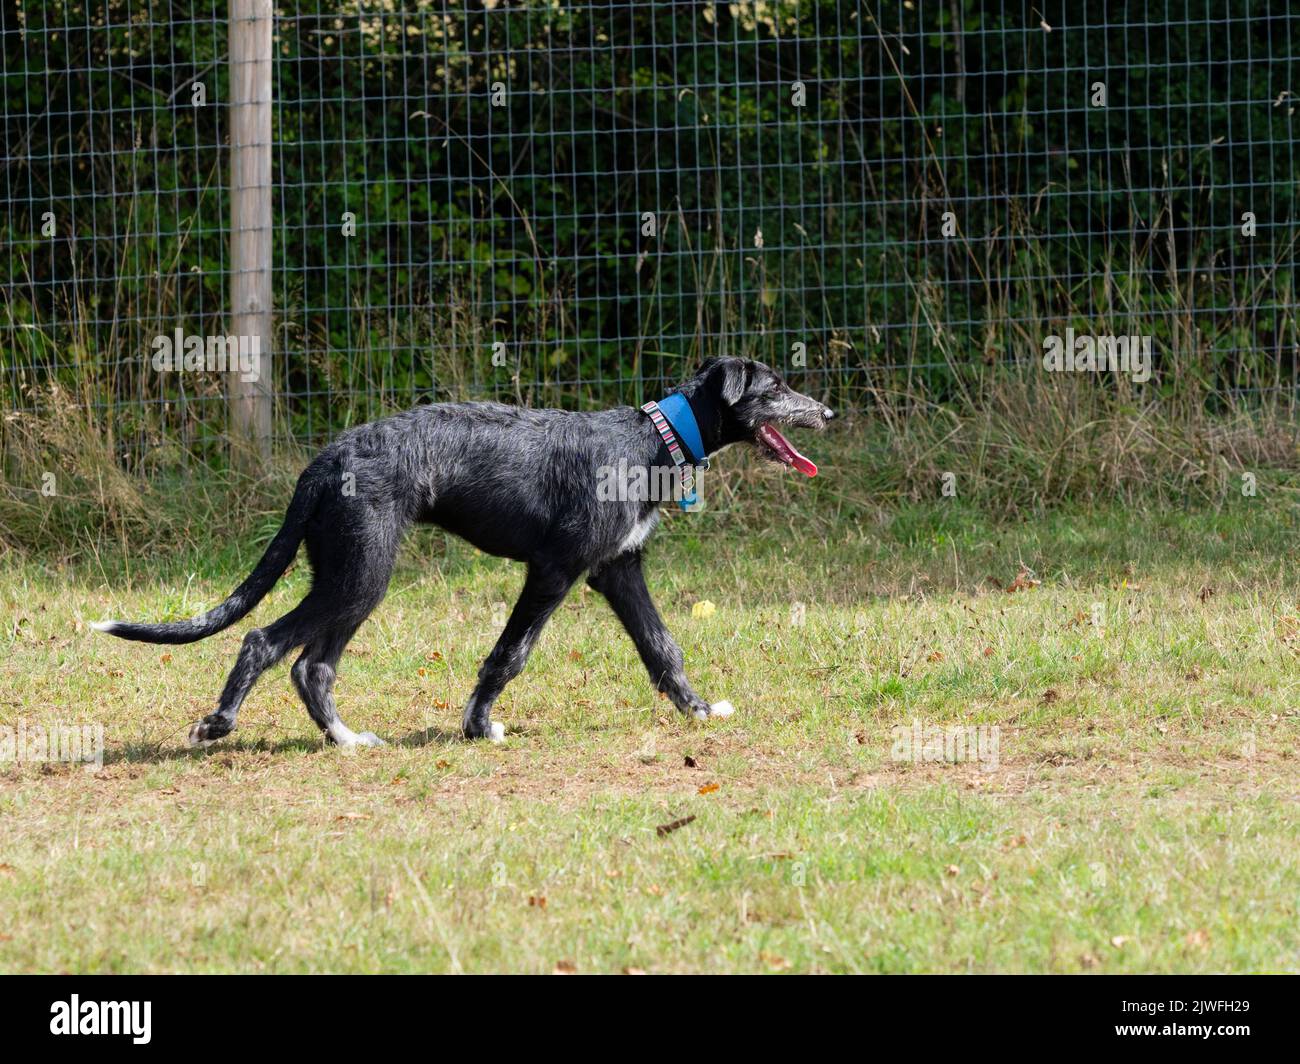 18 week old male deerhound x greyhound black and grey lurcher puppy walking in a grassy field Stock Photo